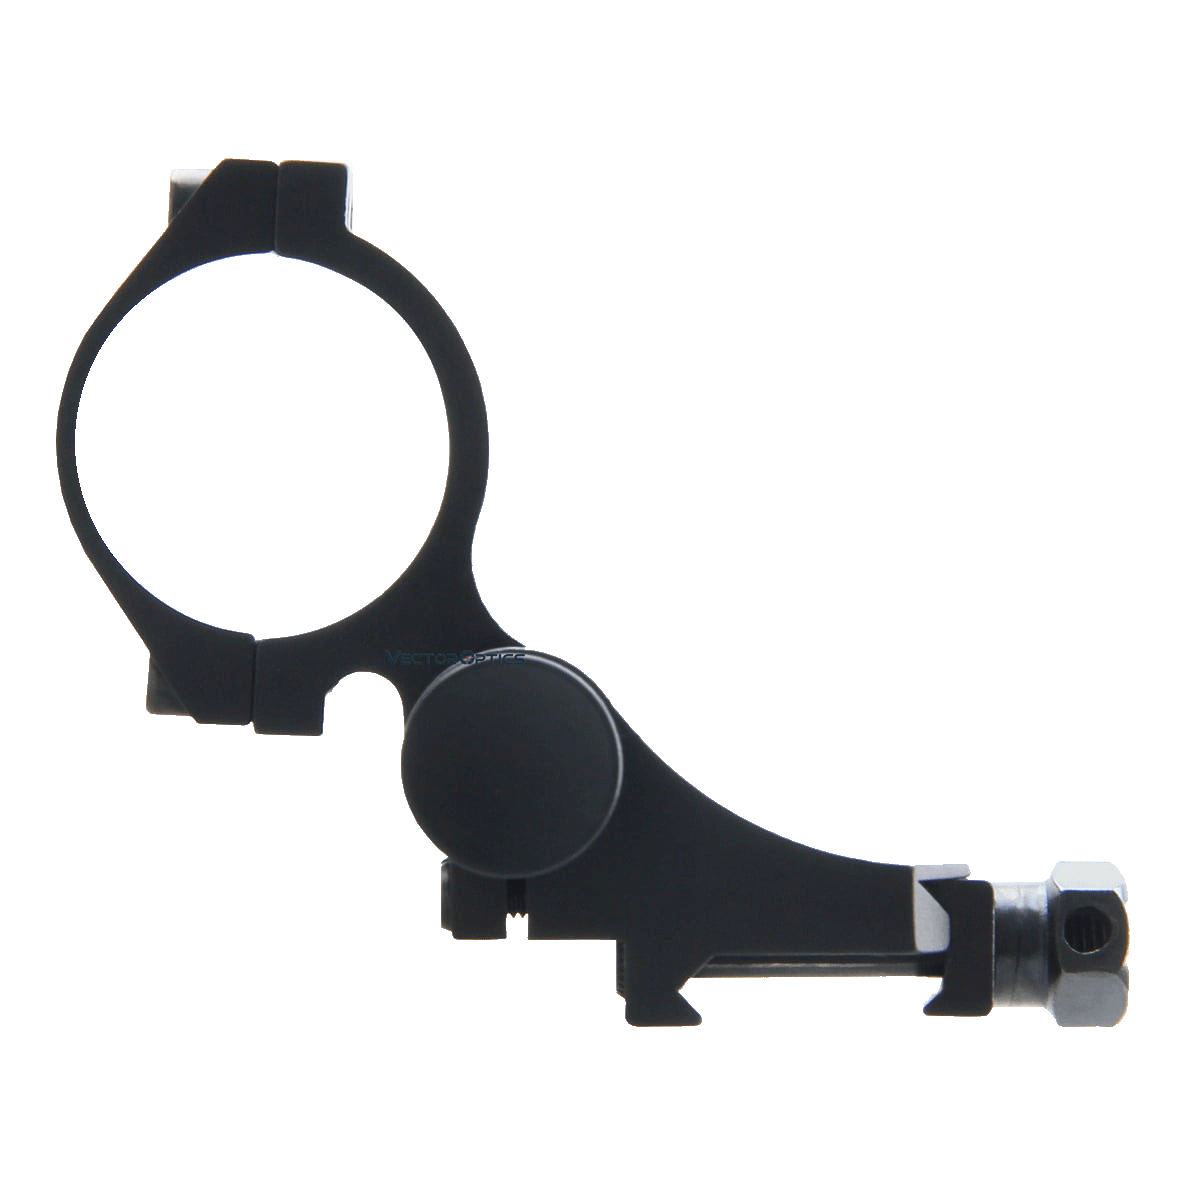 30mm Flip to Side Magnifier Mount Ring